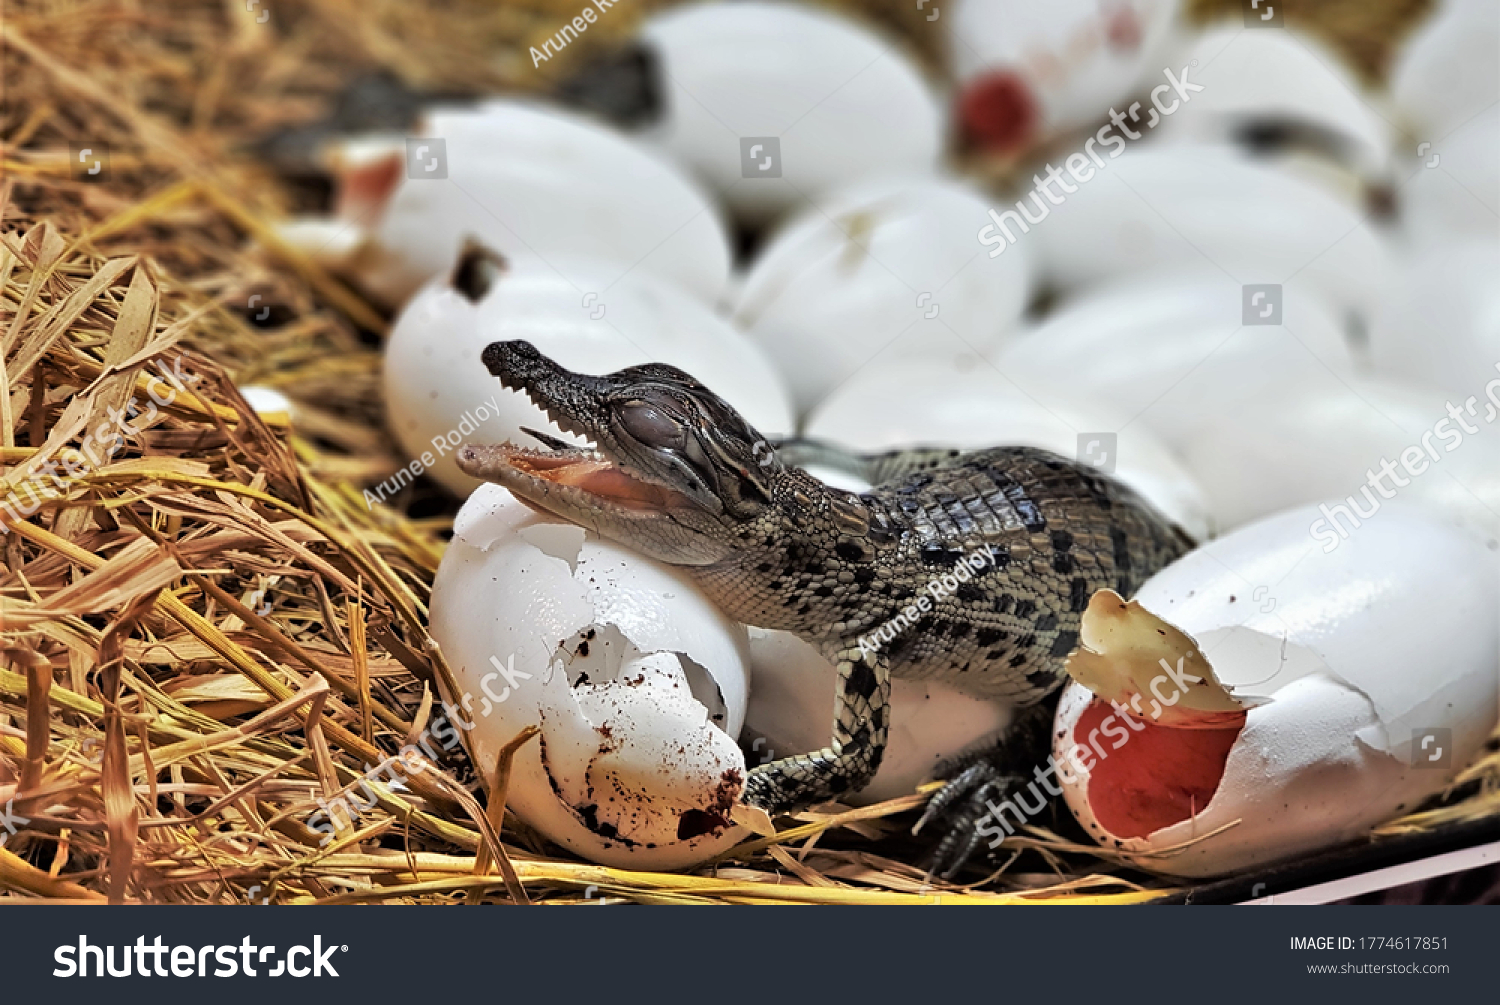 new born freshwater crocodile or crocodile baby are hatching, poke their head out of the egg in hatchery room at crocodile farm.
Johnstone’s crocodile (Crocodylus johnsoni) is aquatic animals. #1774617851